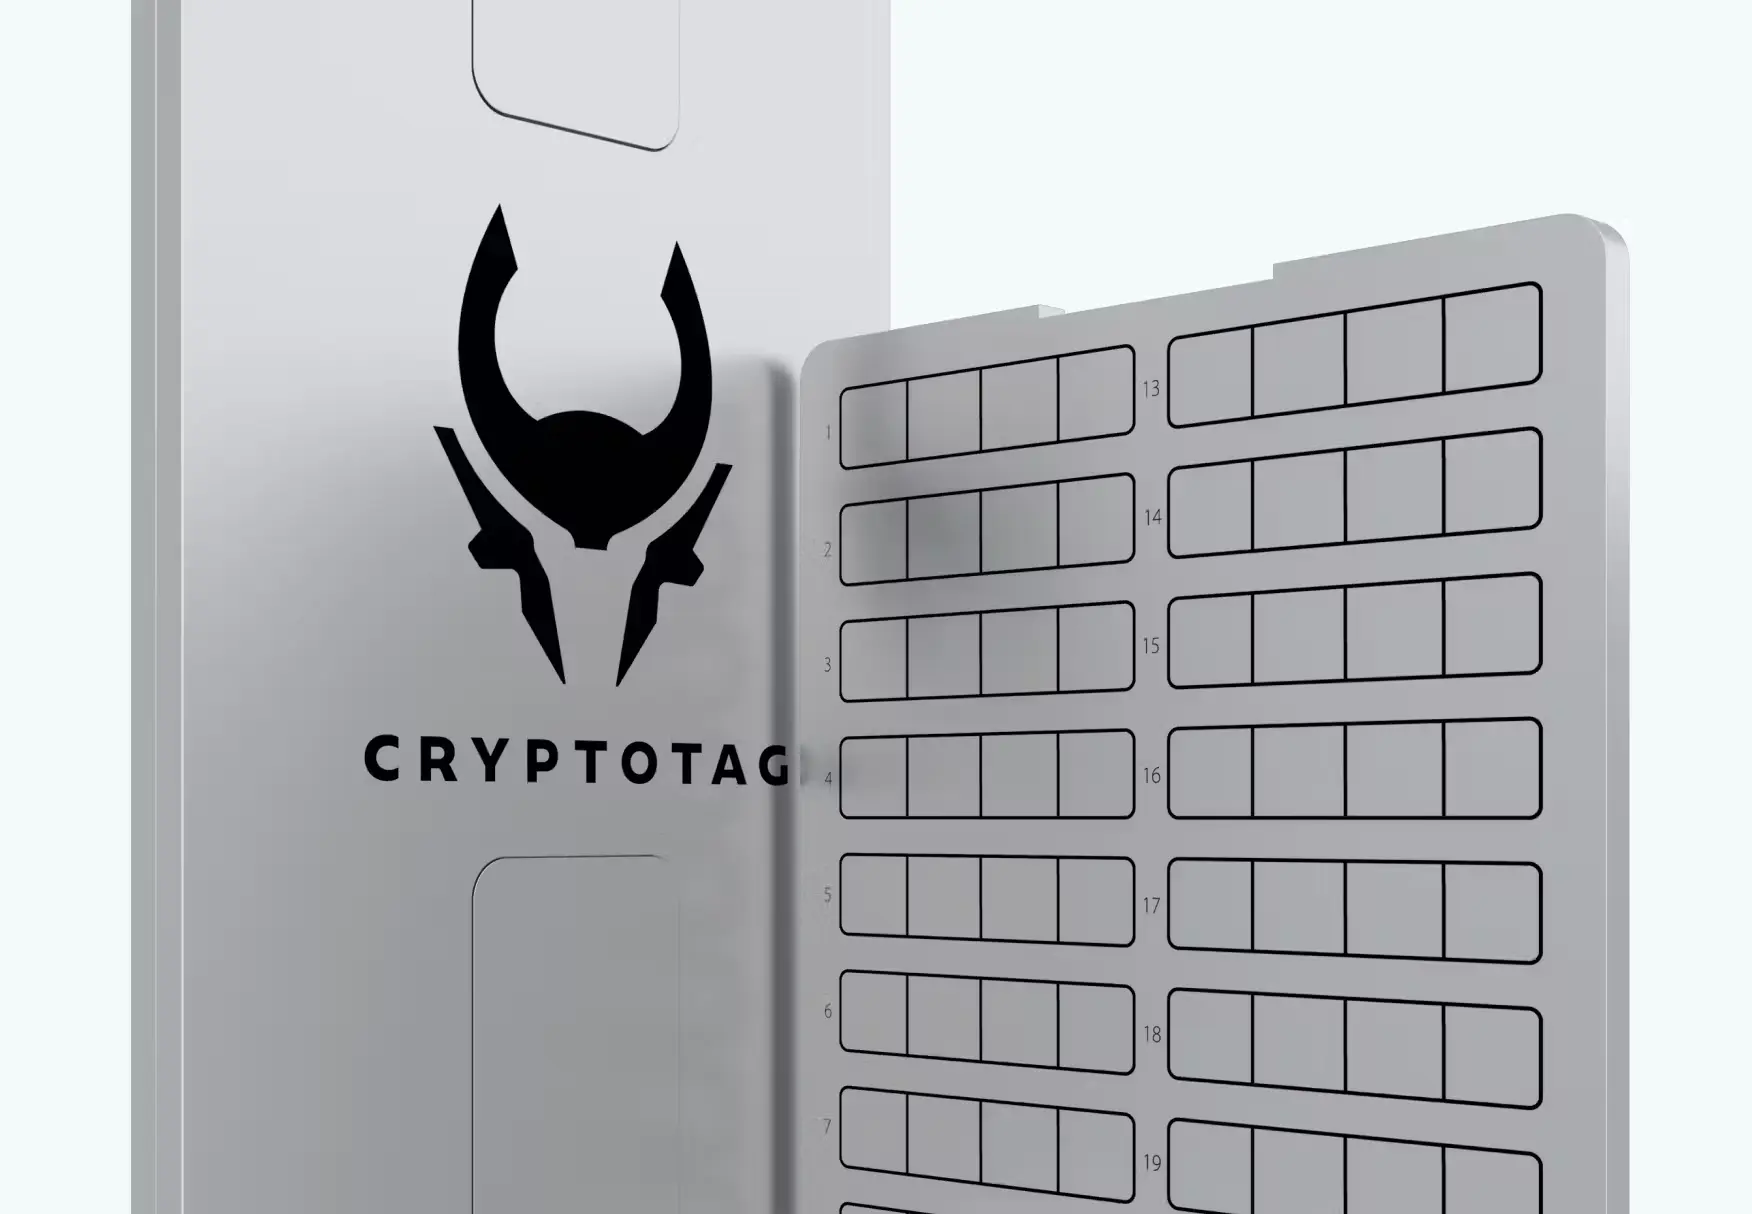 crypto tag seed phrase protector